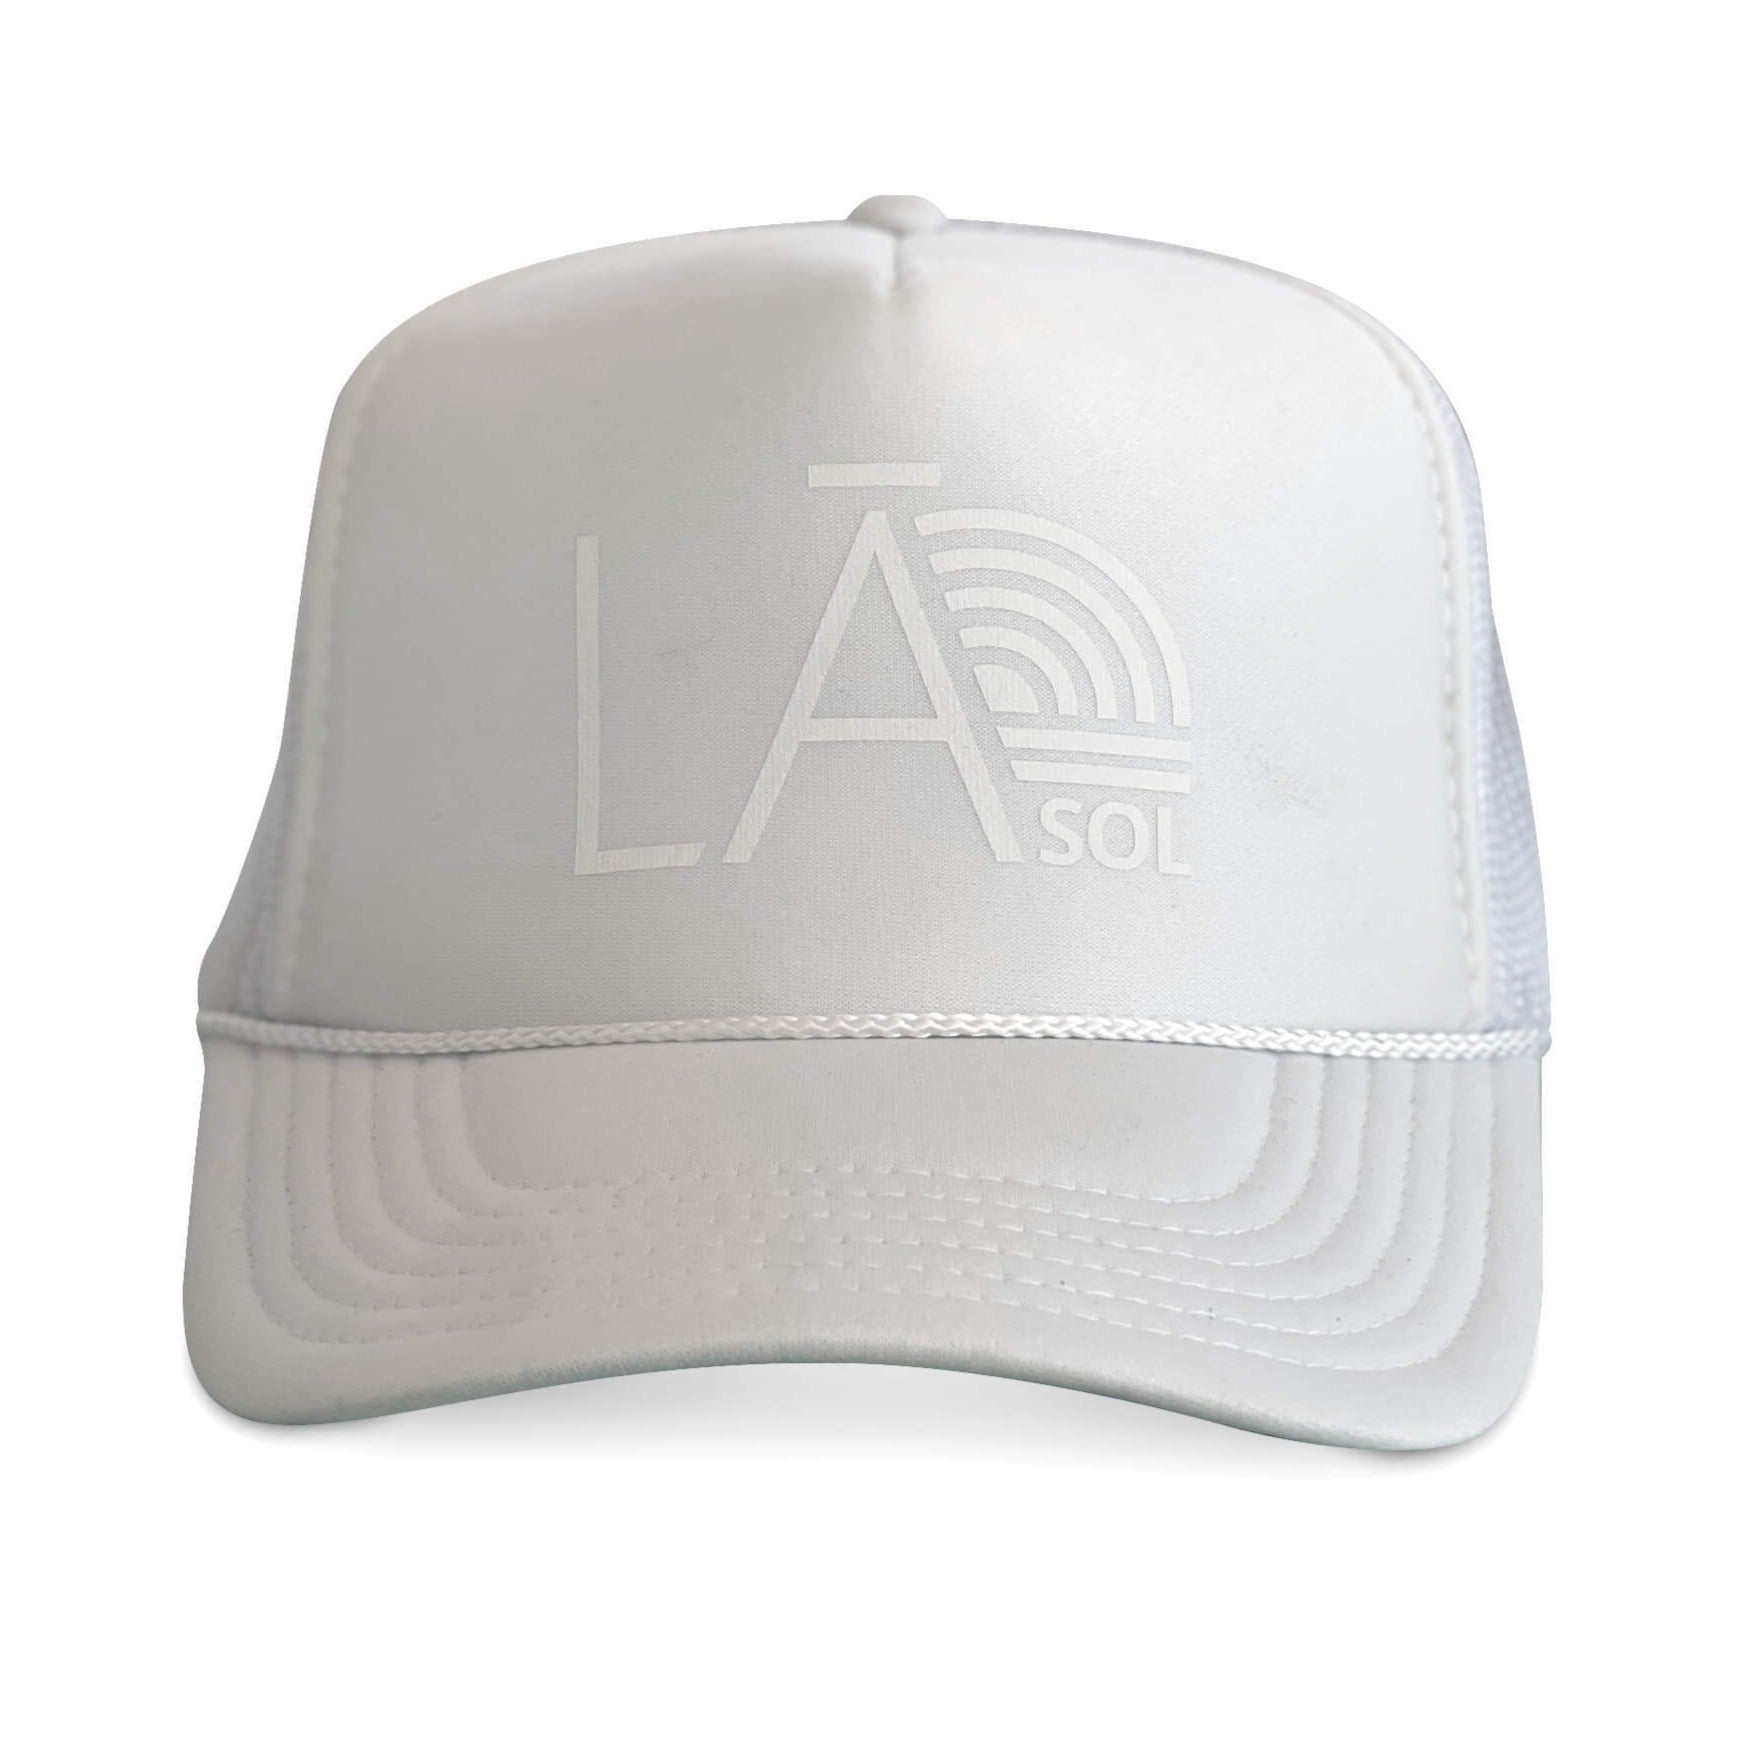 LA Sol SPF 30 Clear Zinc Mineral Sunscreen White Logo Trucker Hat 